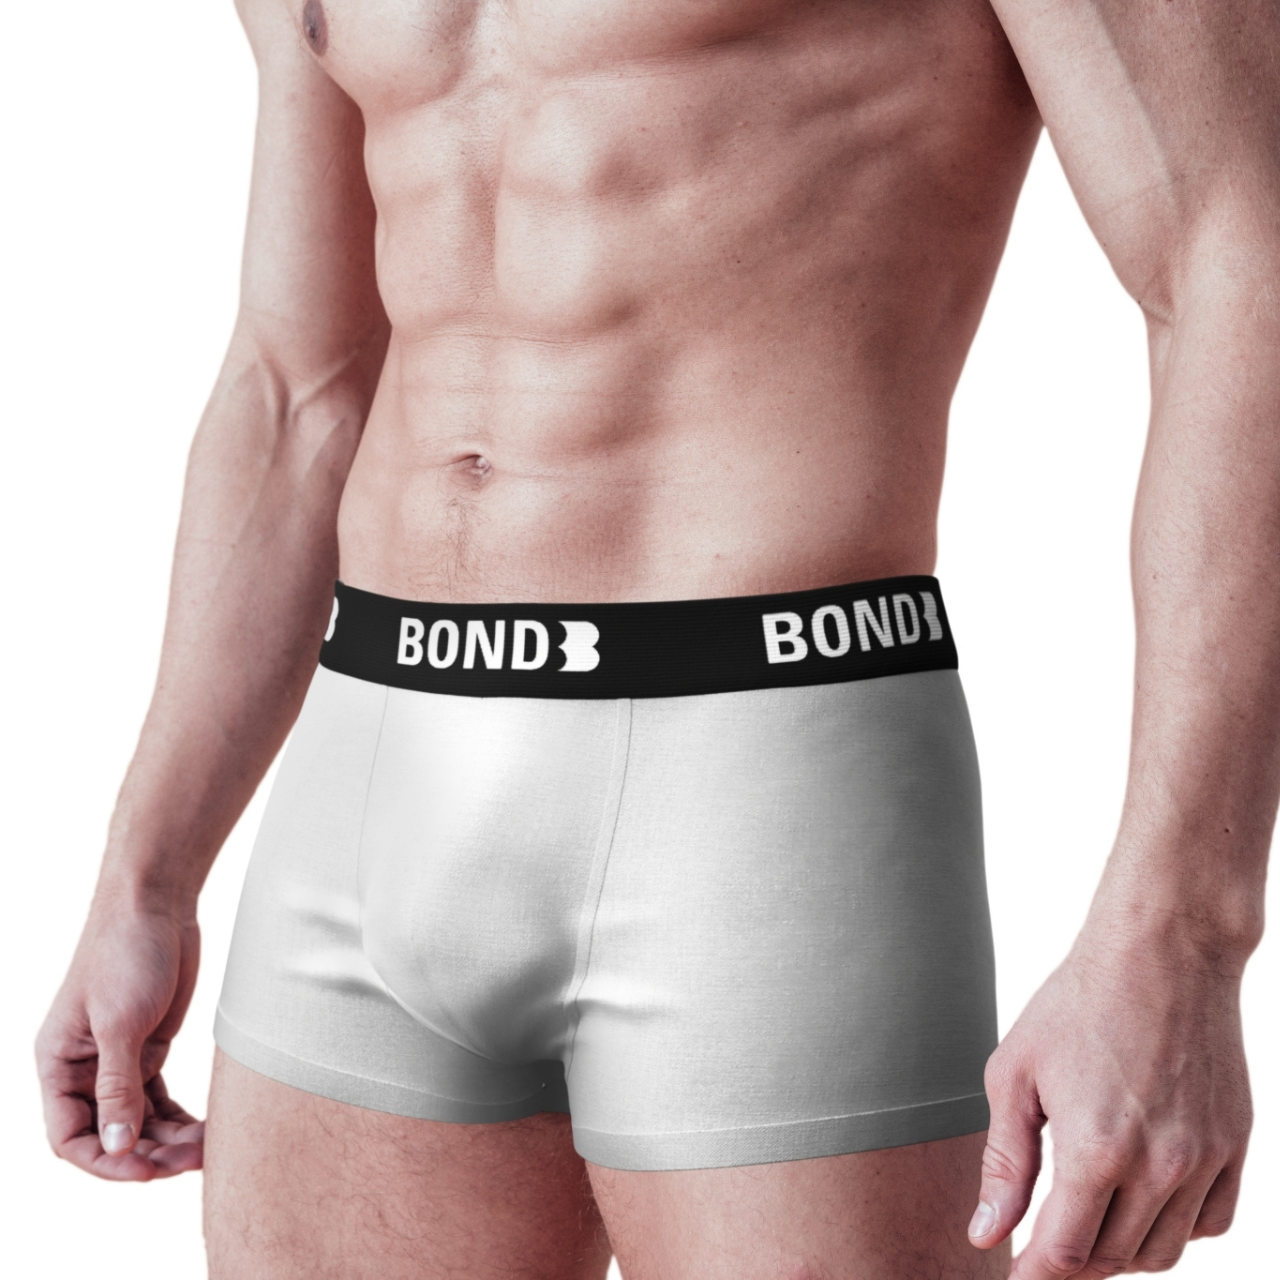 BOND Men's underwear (ผ้าไหมเย็น ICY Silk)